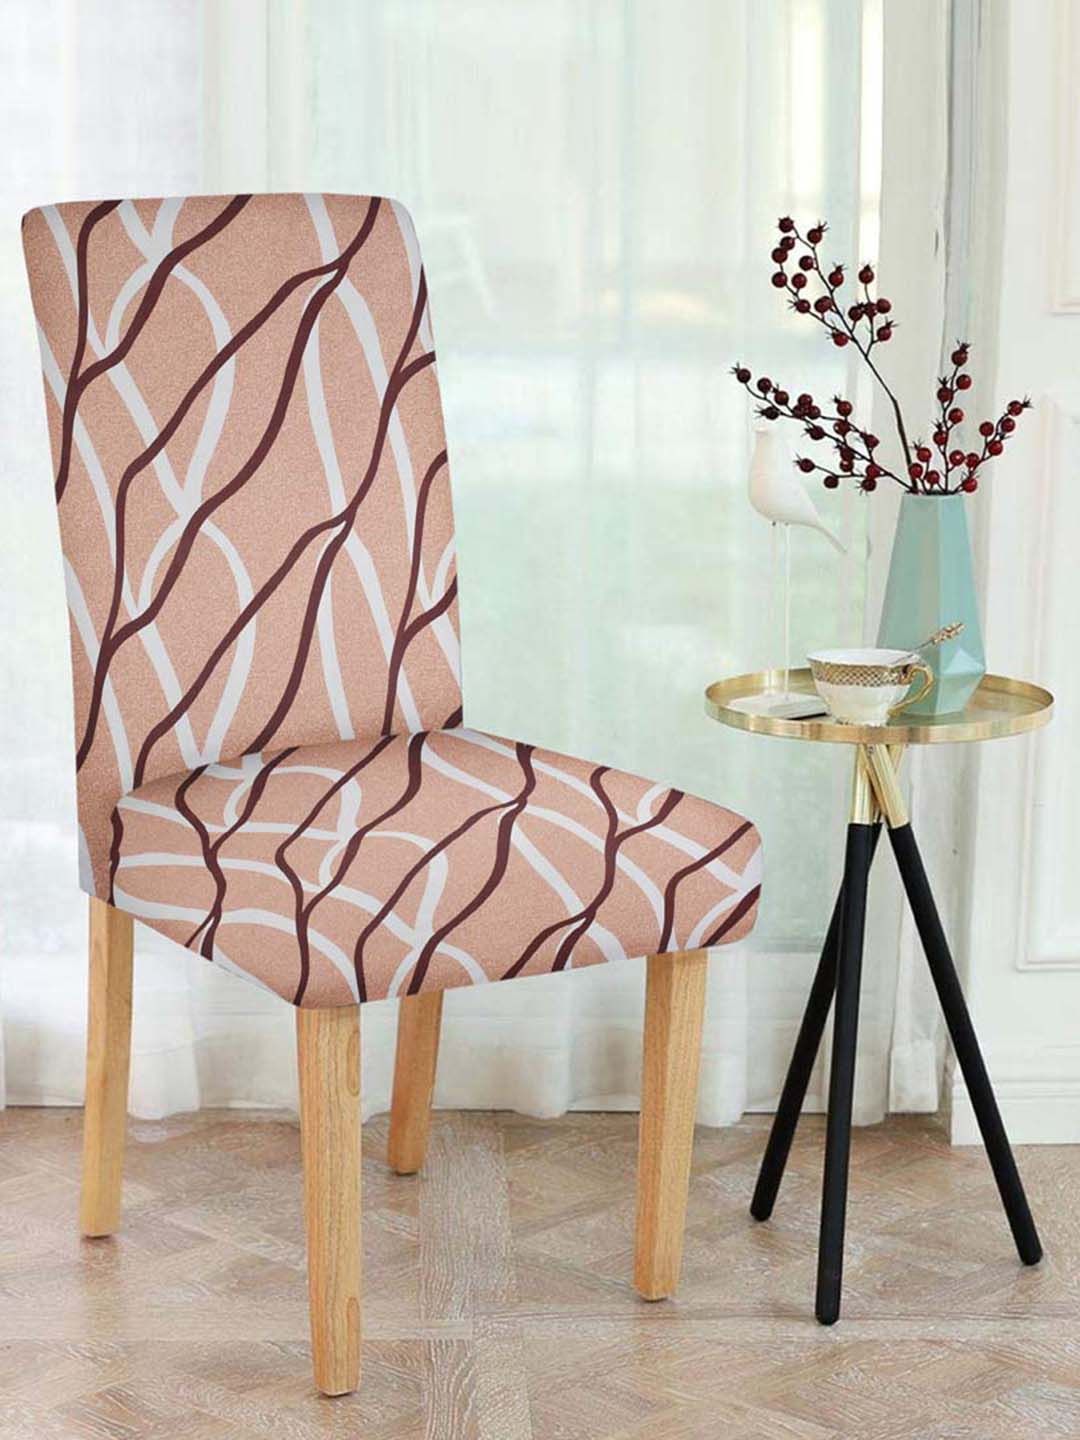 Slushy Mushy Set Of 6 Printed Chair Cover Price in India